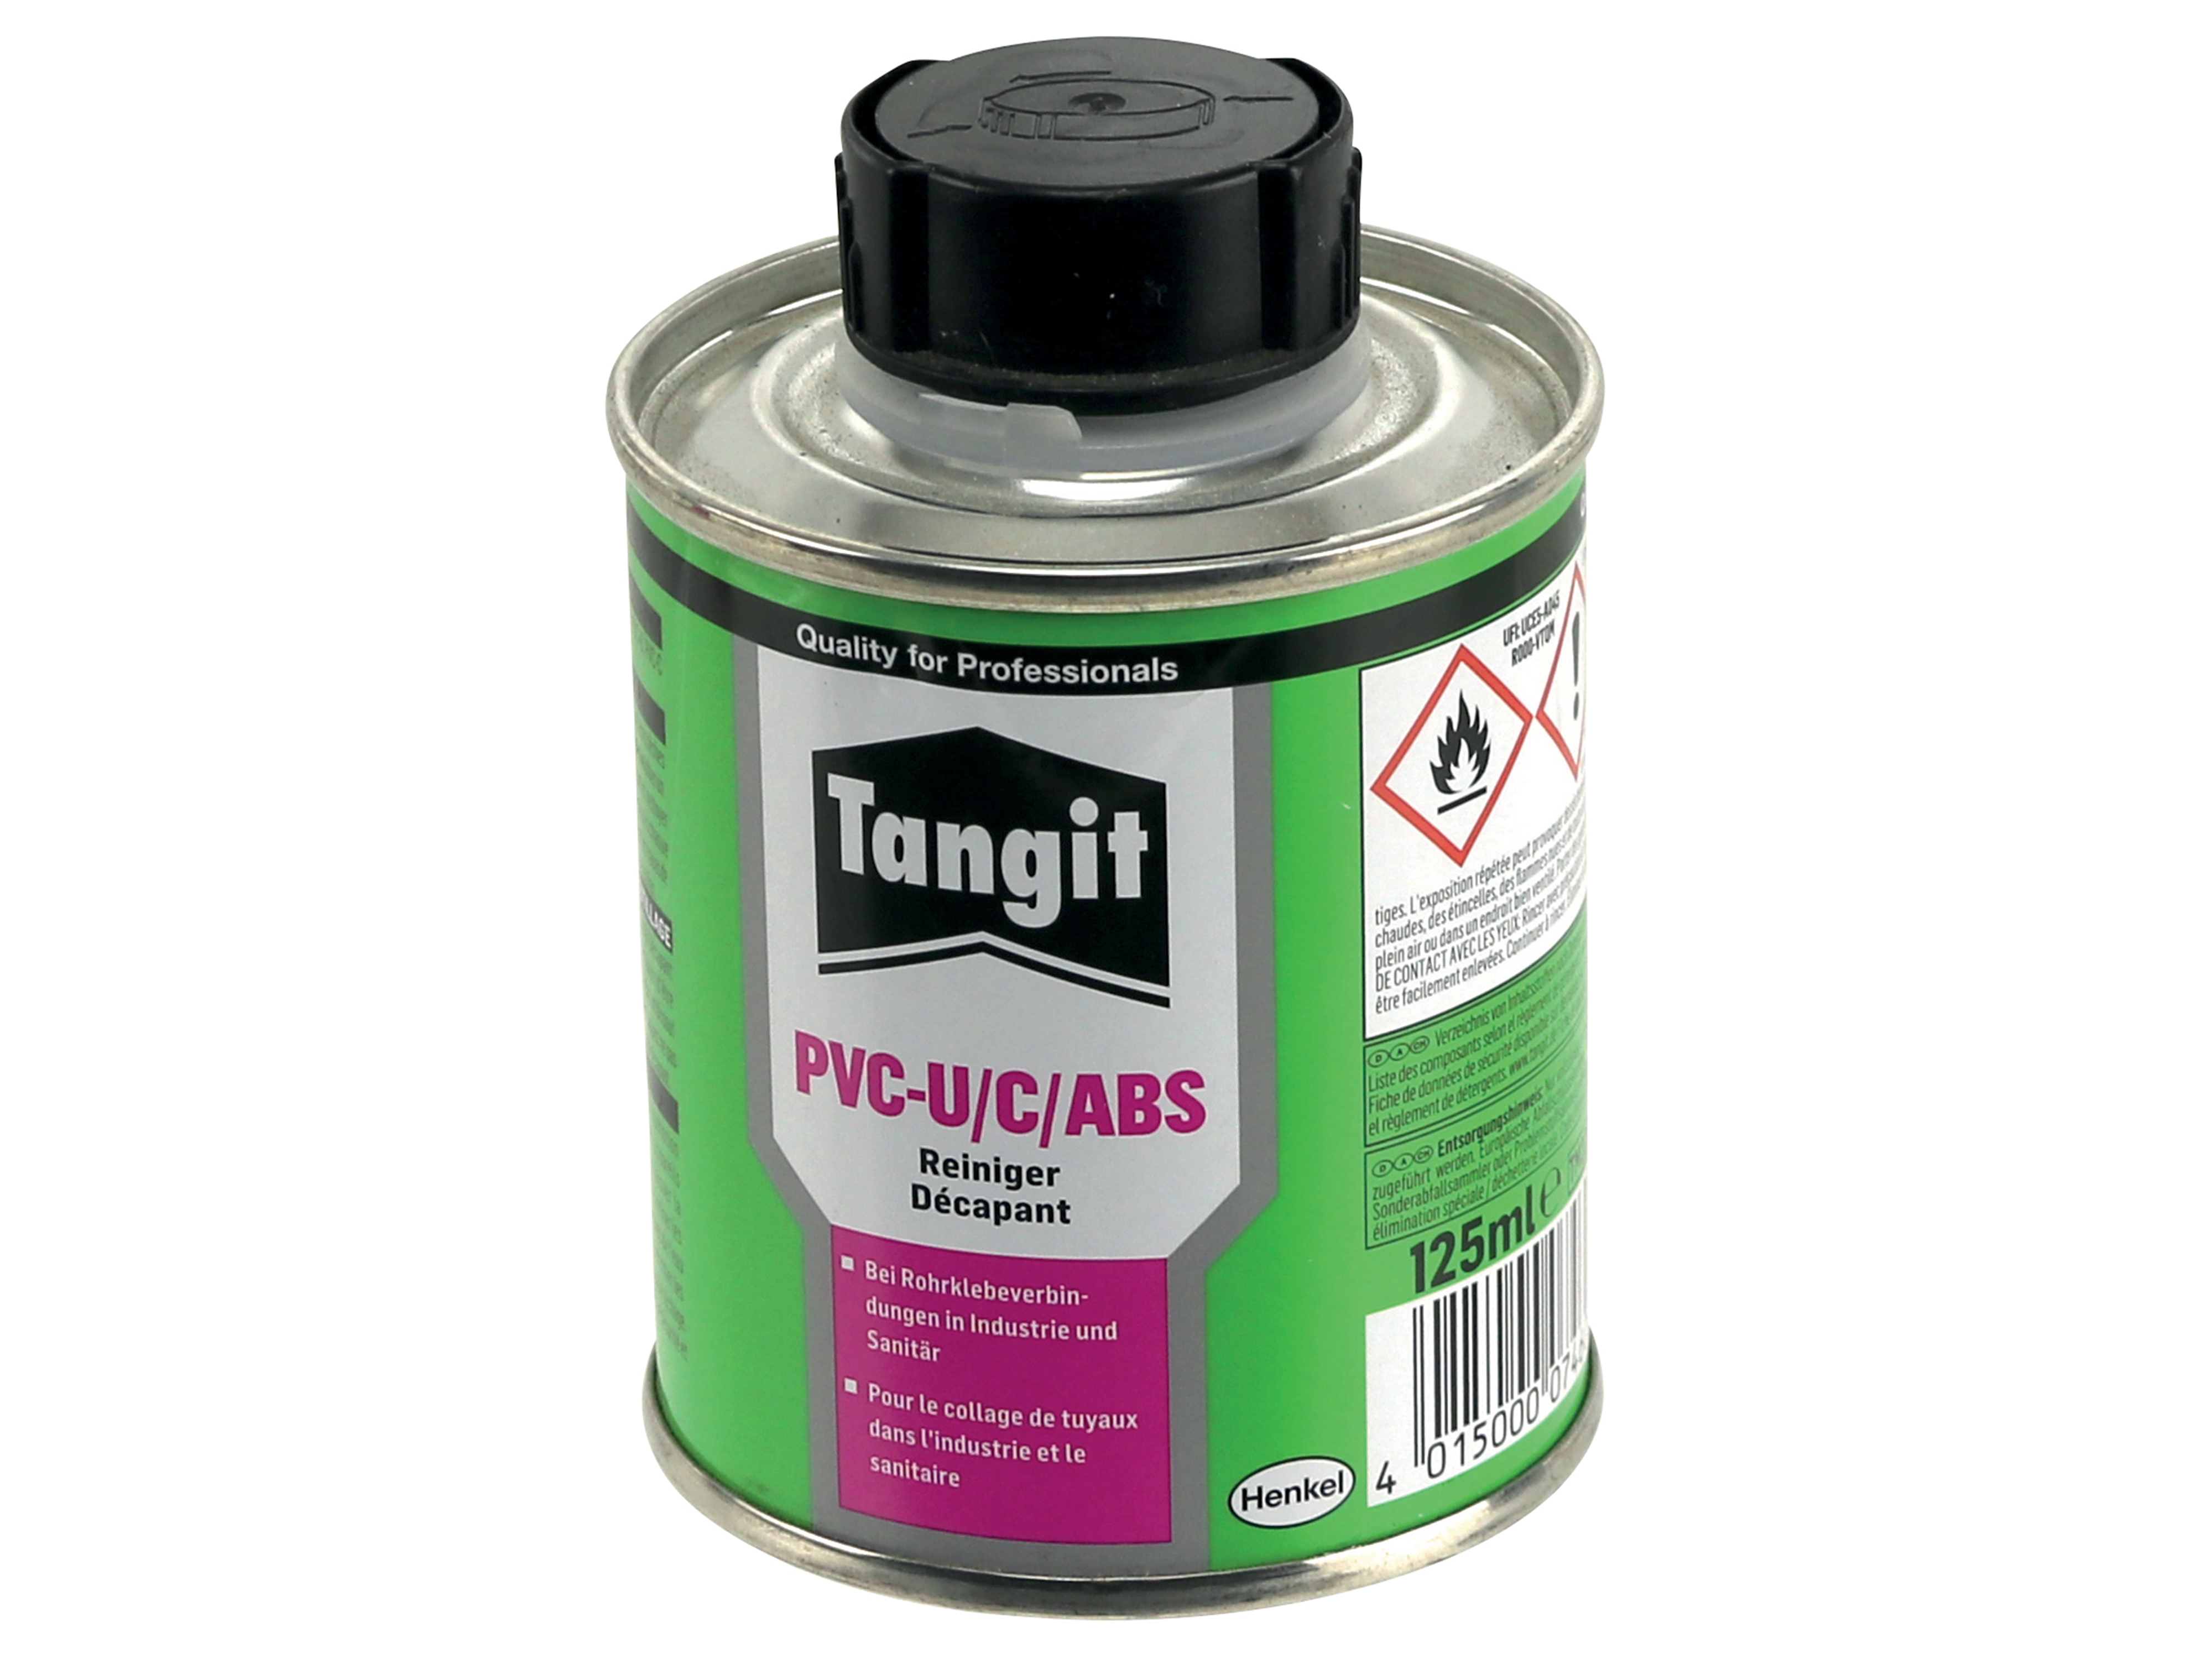 TANGIT Reiniger PVC-U/C/ABS, 125ml